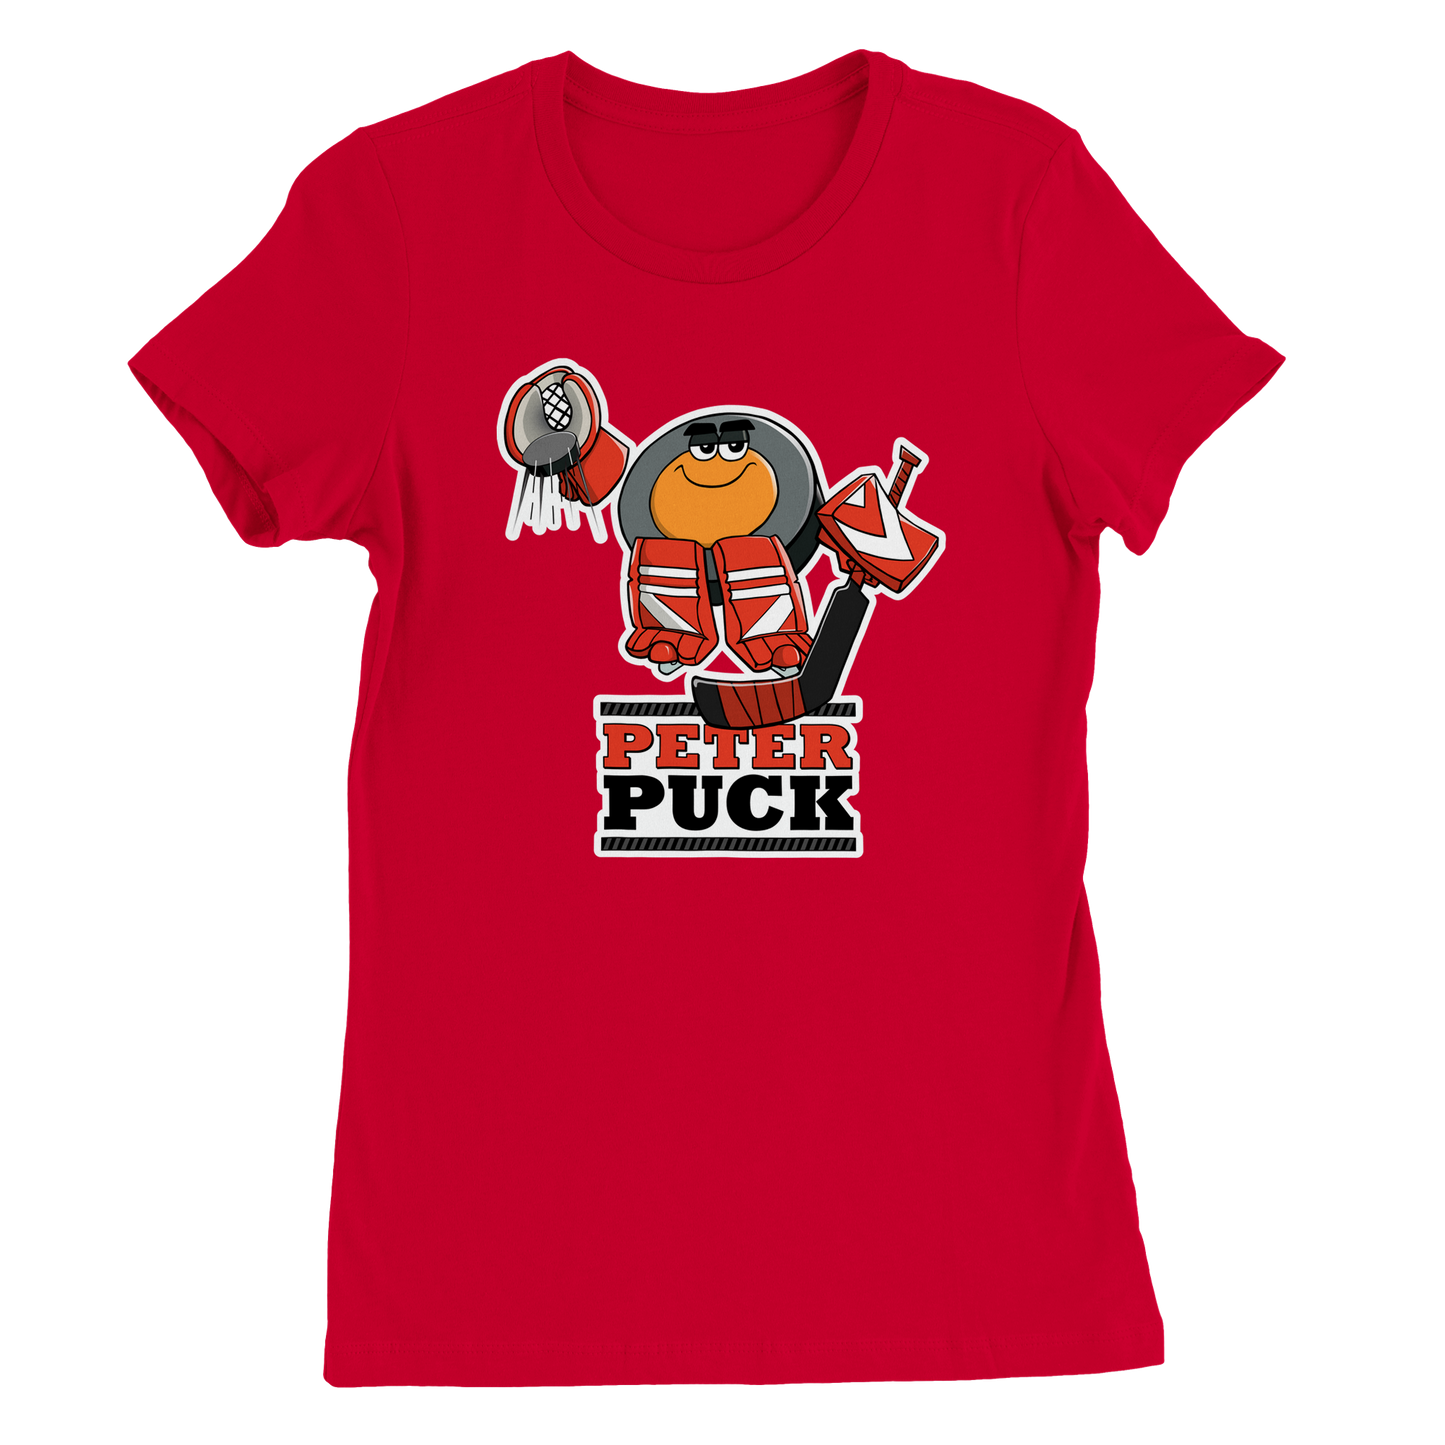 Peter Puck Plays Goalie Premium Womens Crewneck T-shirt